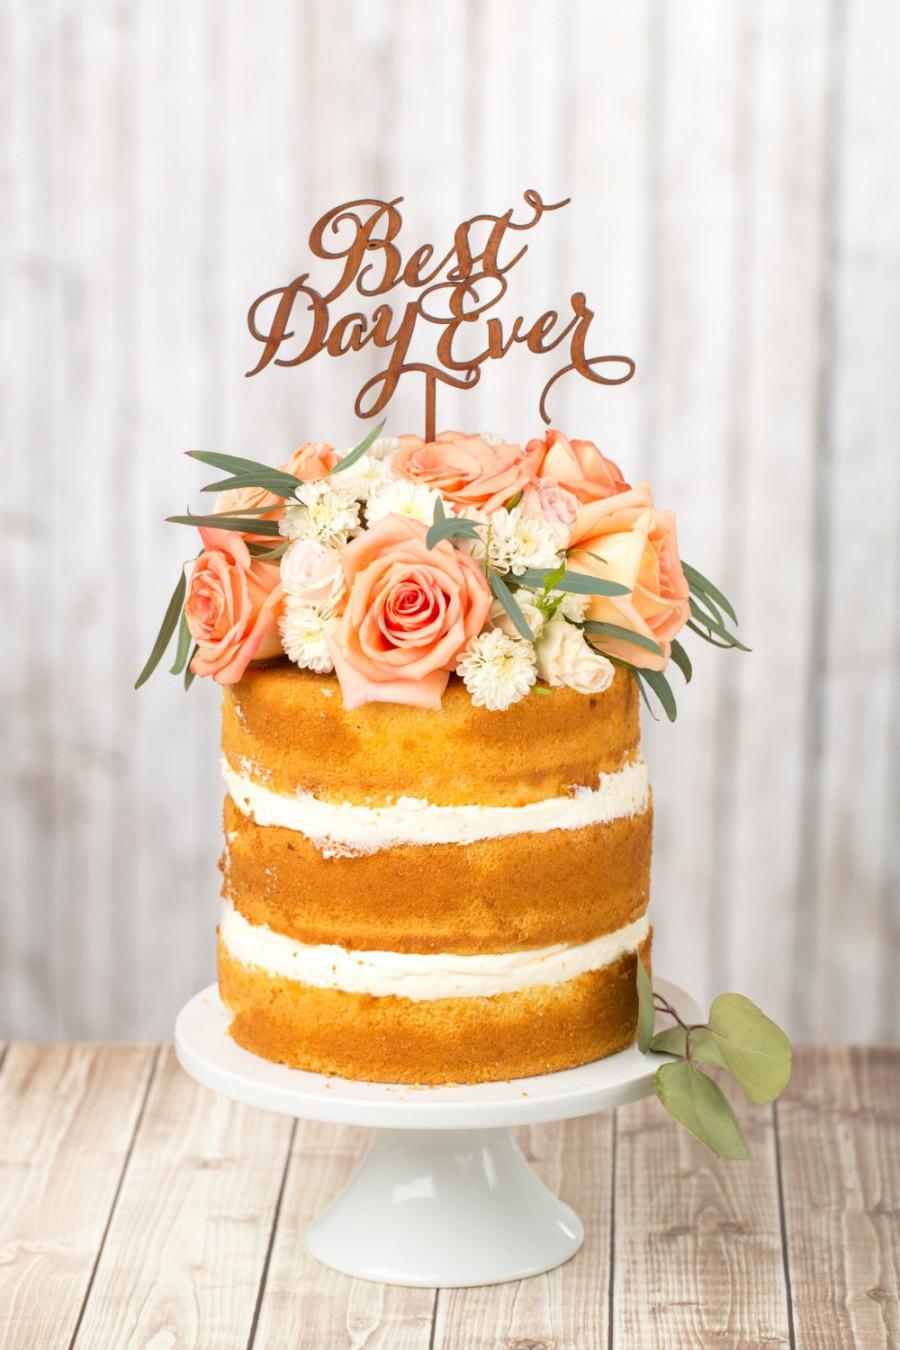 Свадьба - Wedding Cake Topper - Best Day Ever - Mahogany